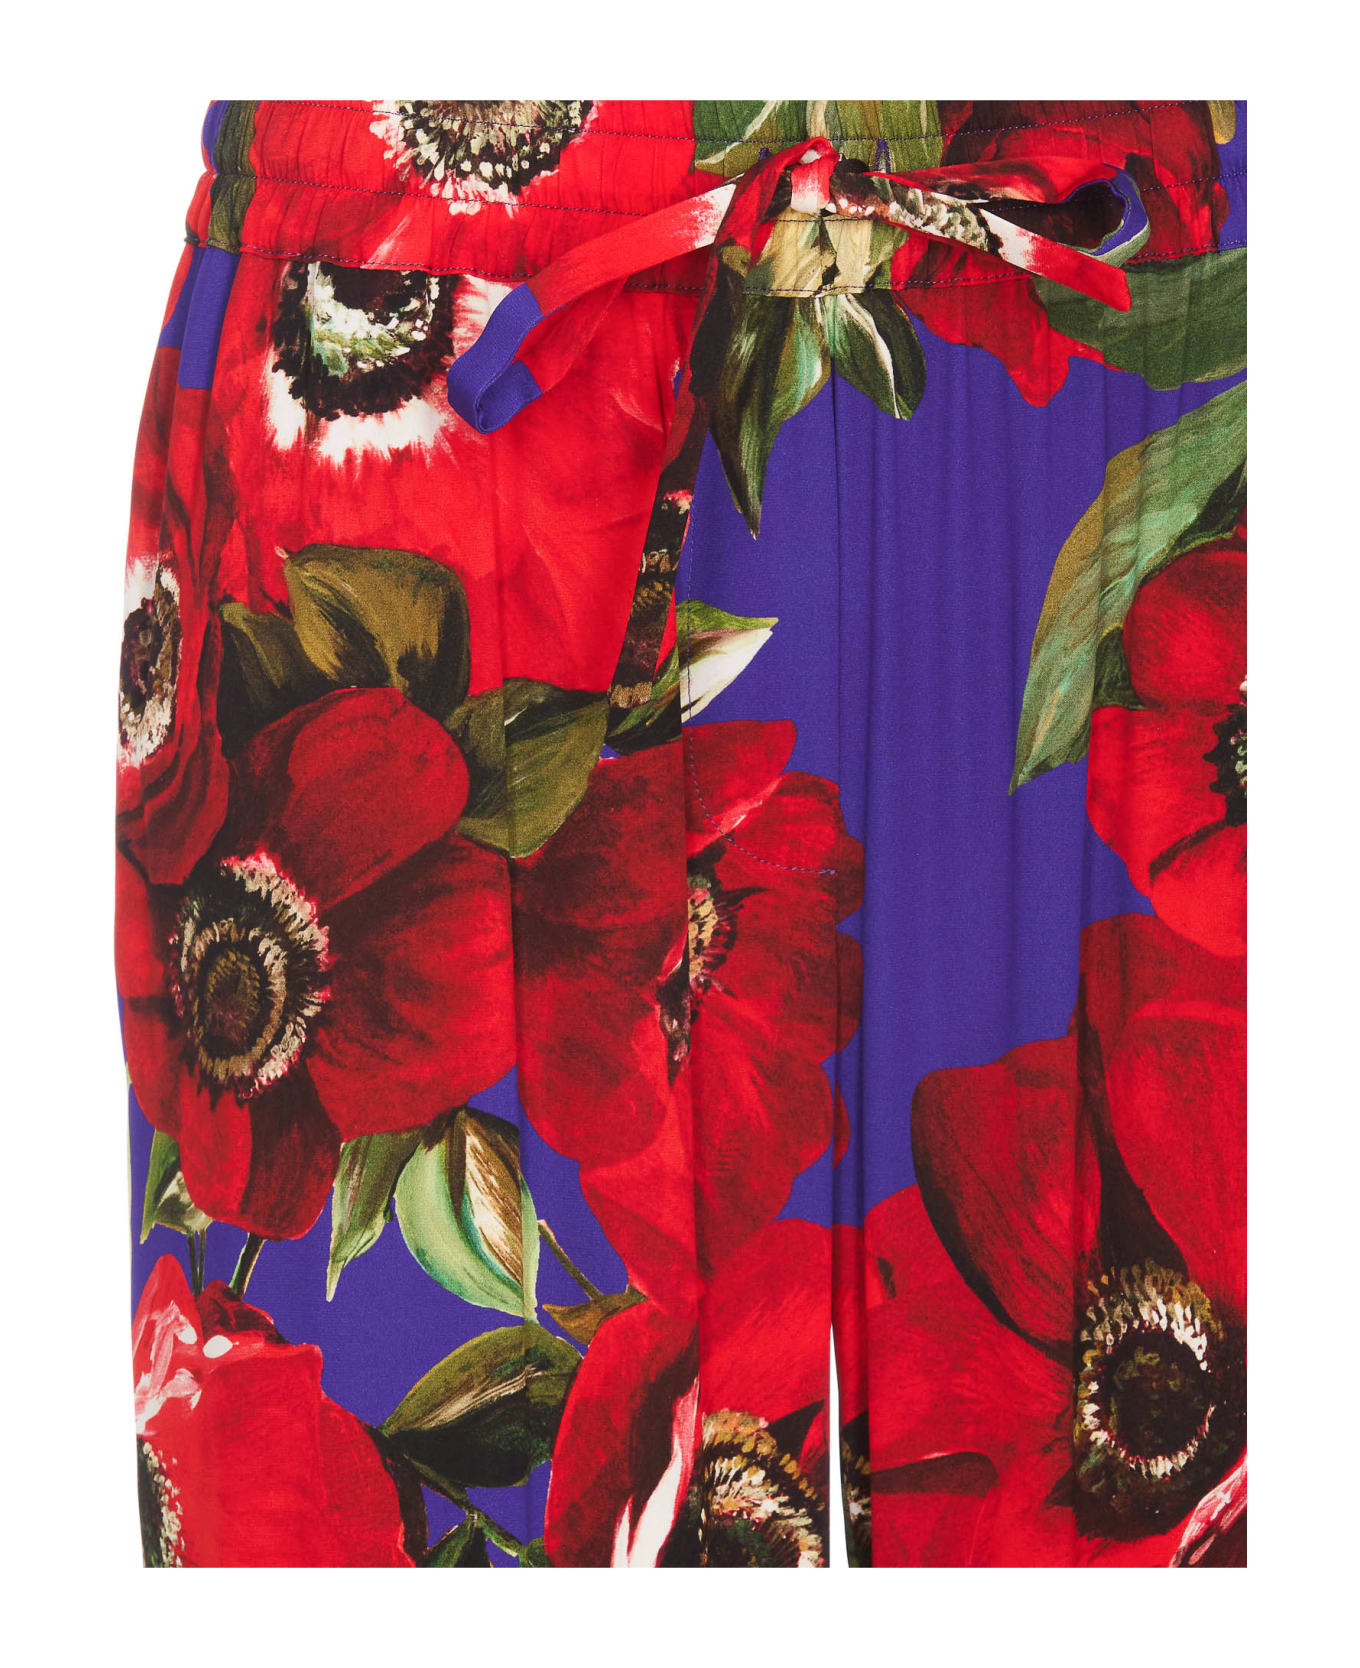 Dolce & Gabbana Printed Silk Pants - red ボトムス